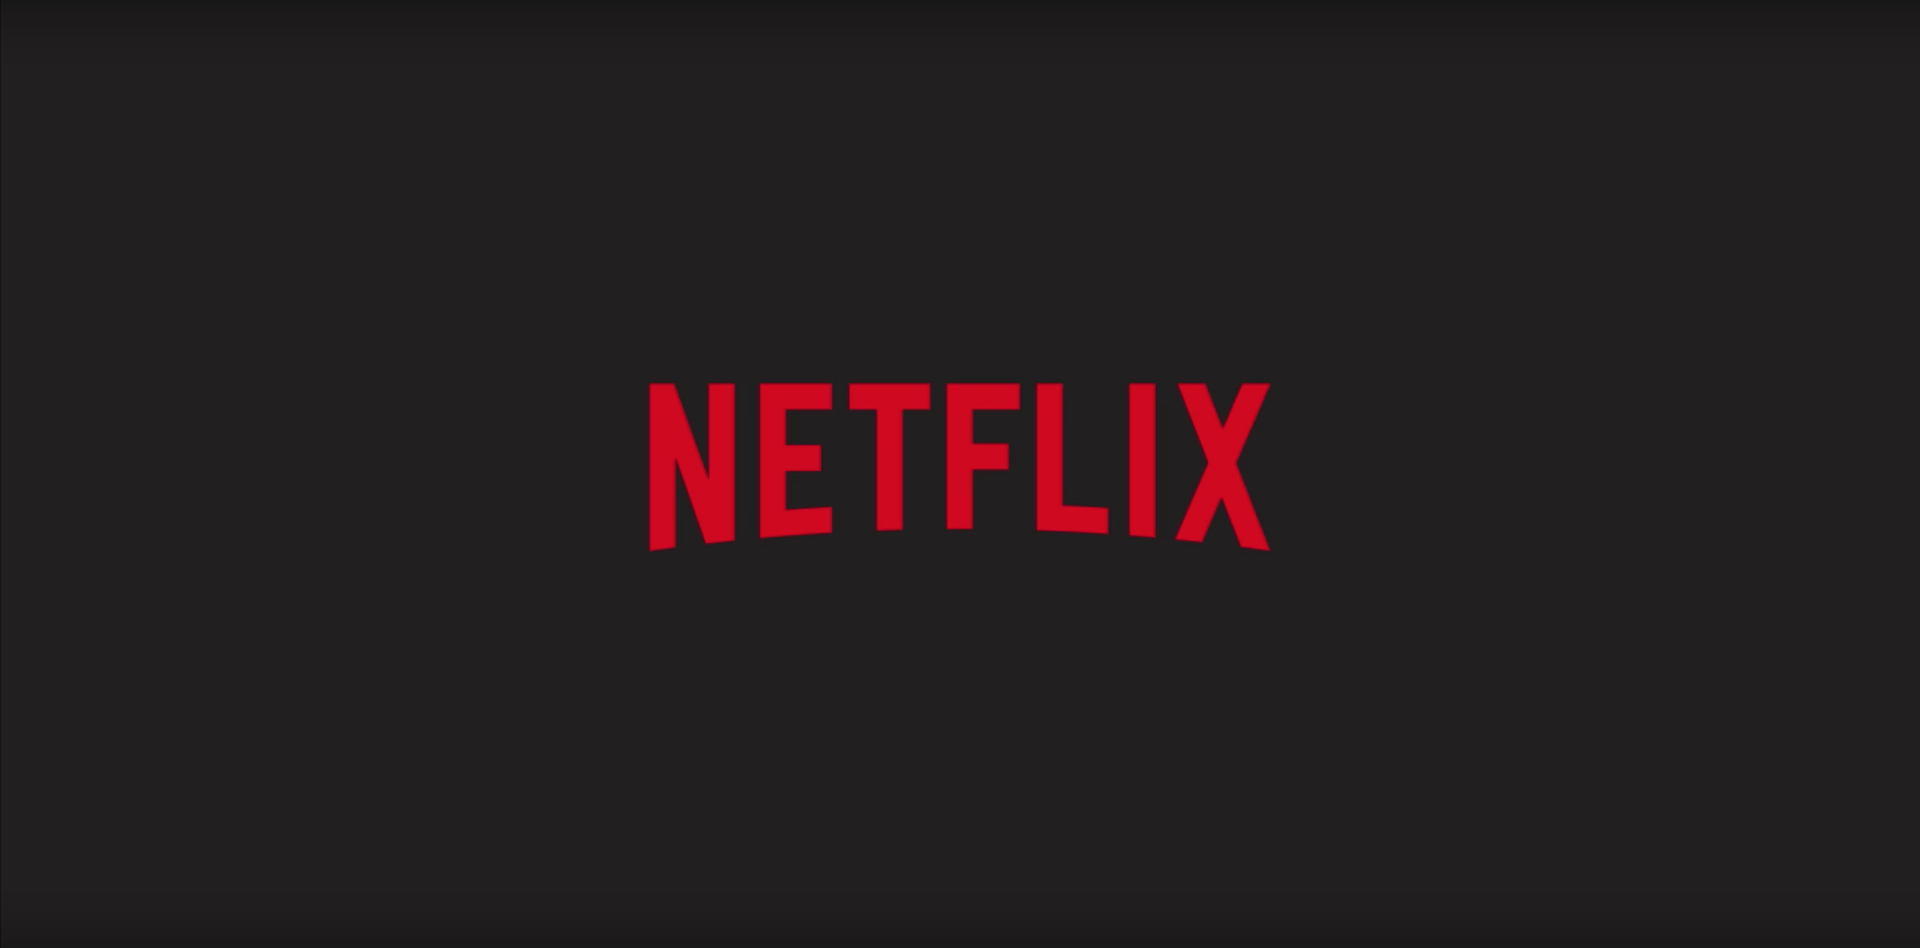 Netflix declare more than $1.3 billion in UK revenue